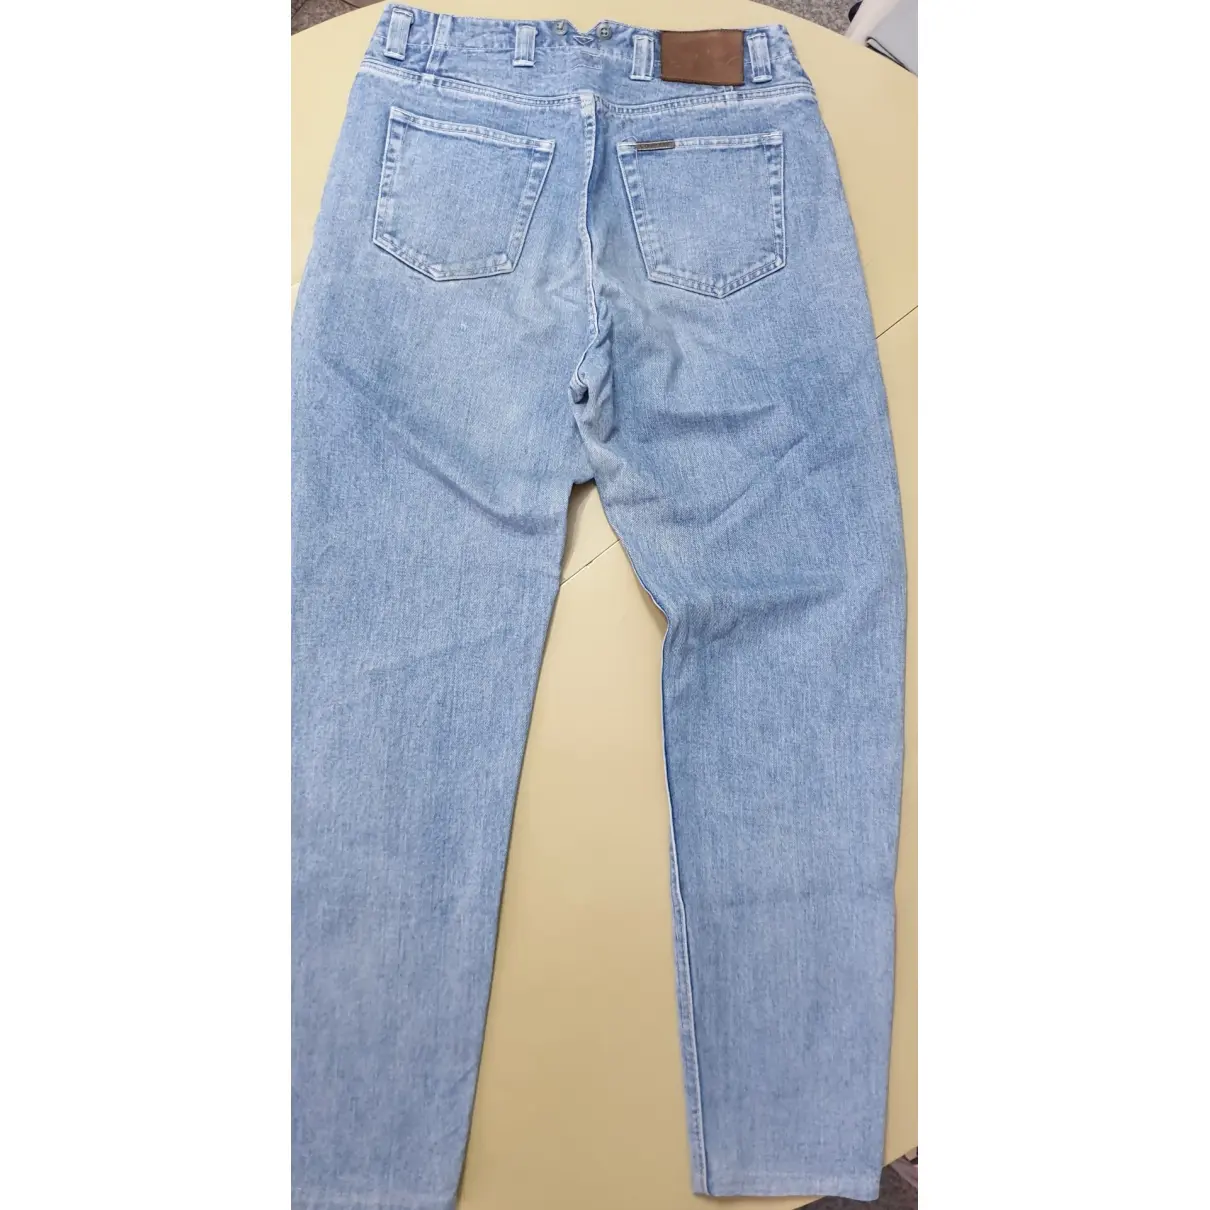 Buy Calvin Klein Blue Cotton Jeans online